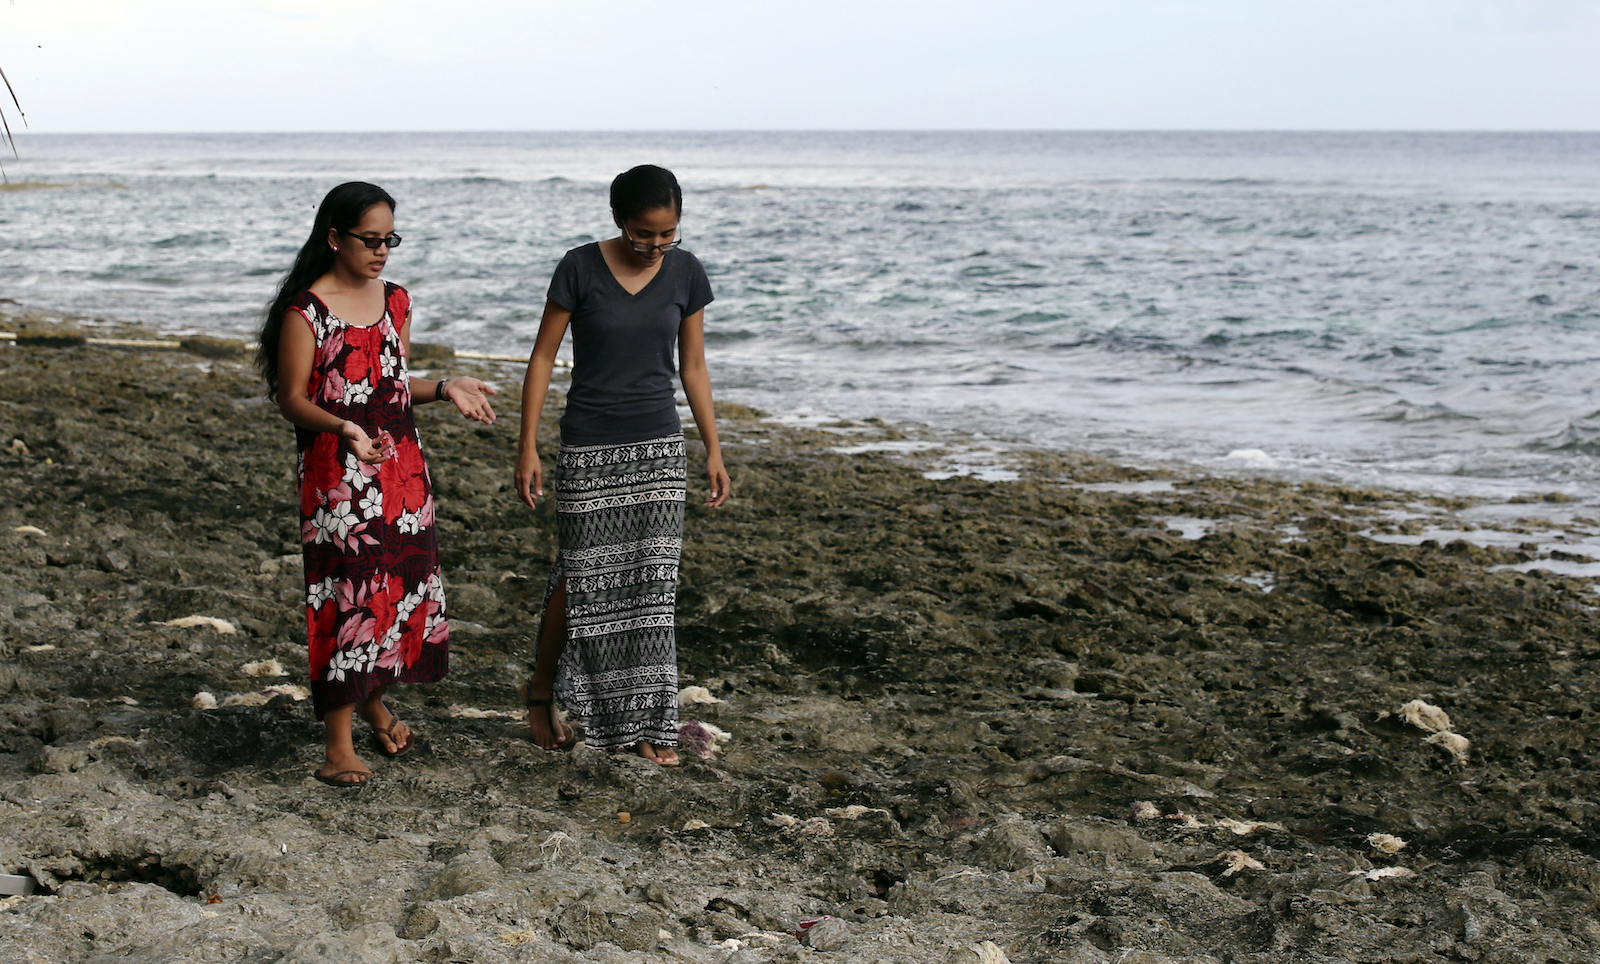 Two women walk along a rocky sea shore